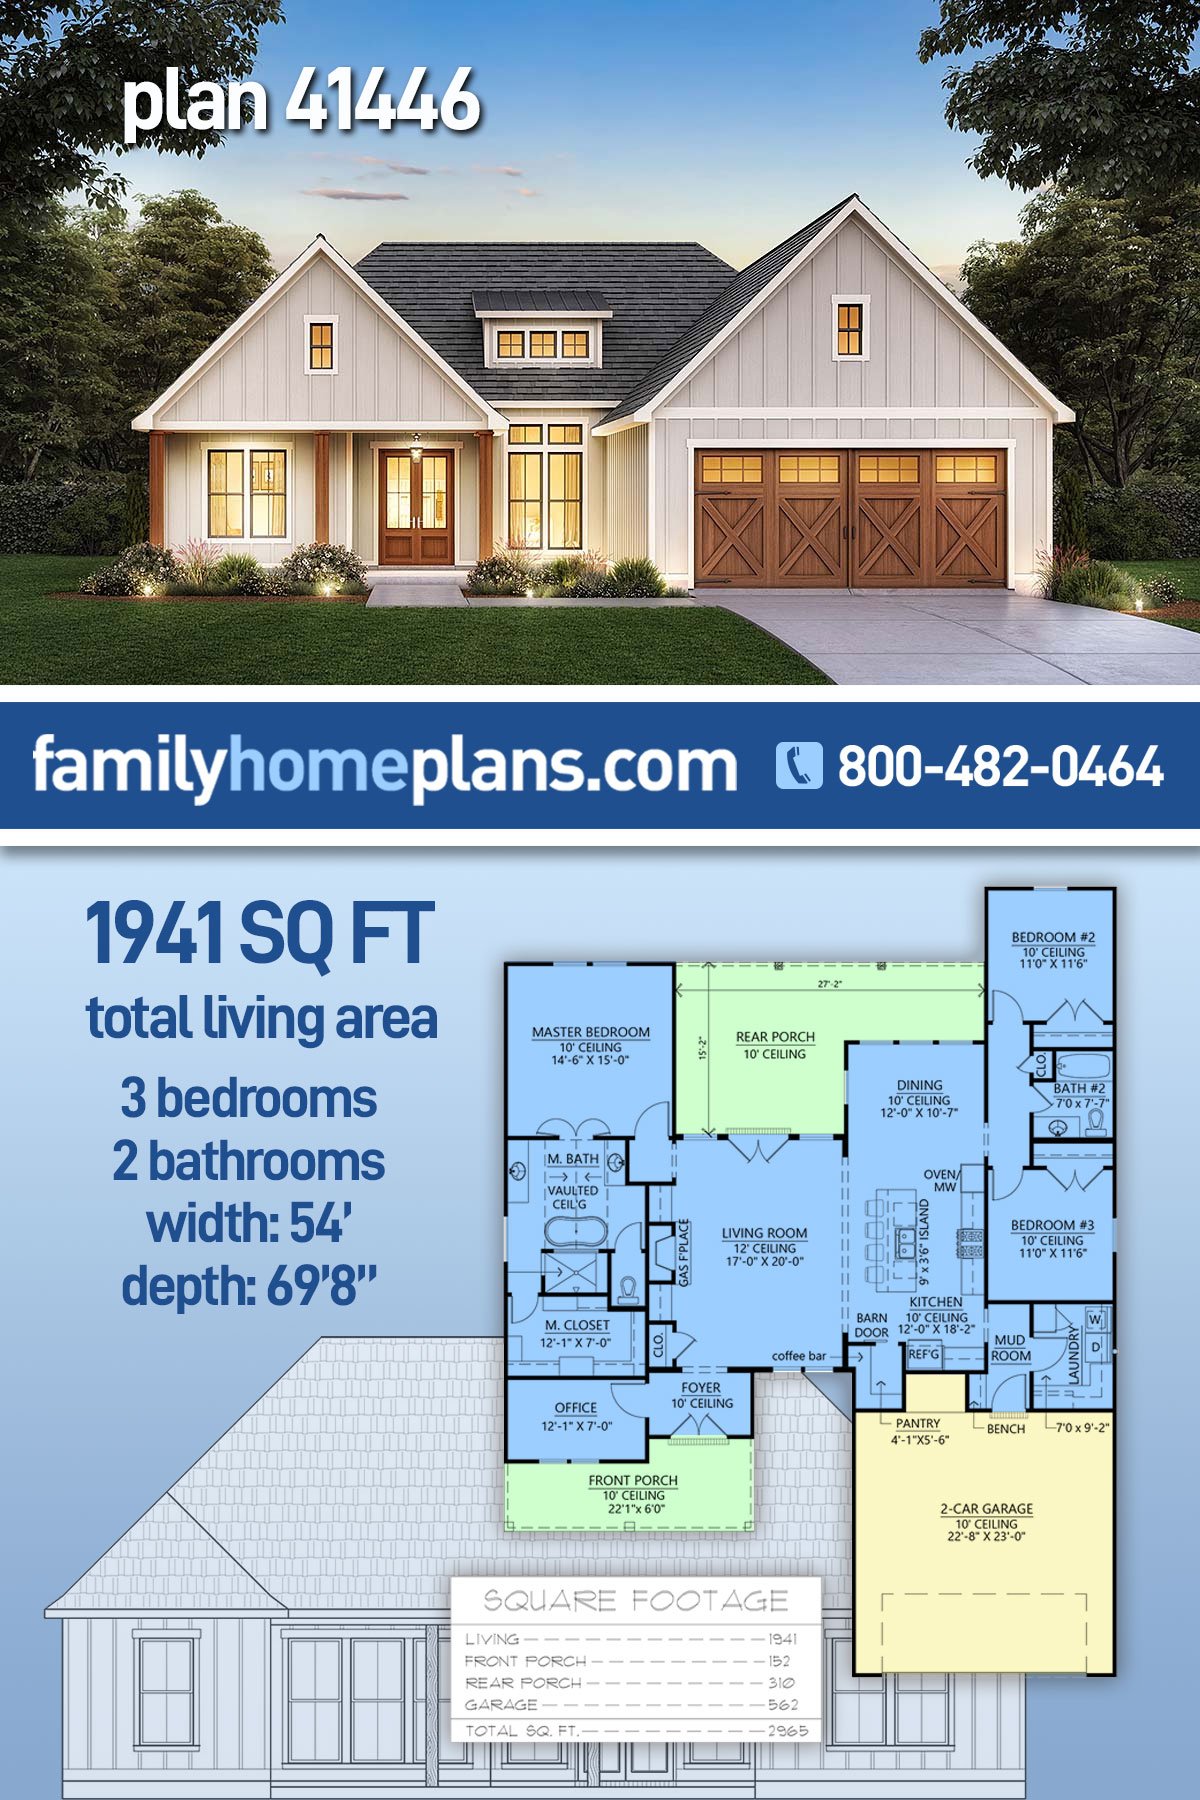 House Plan 41446